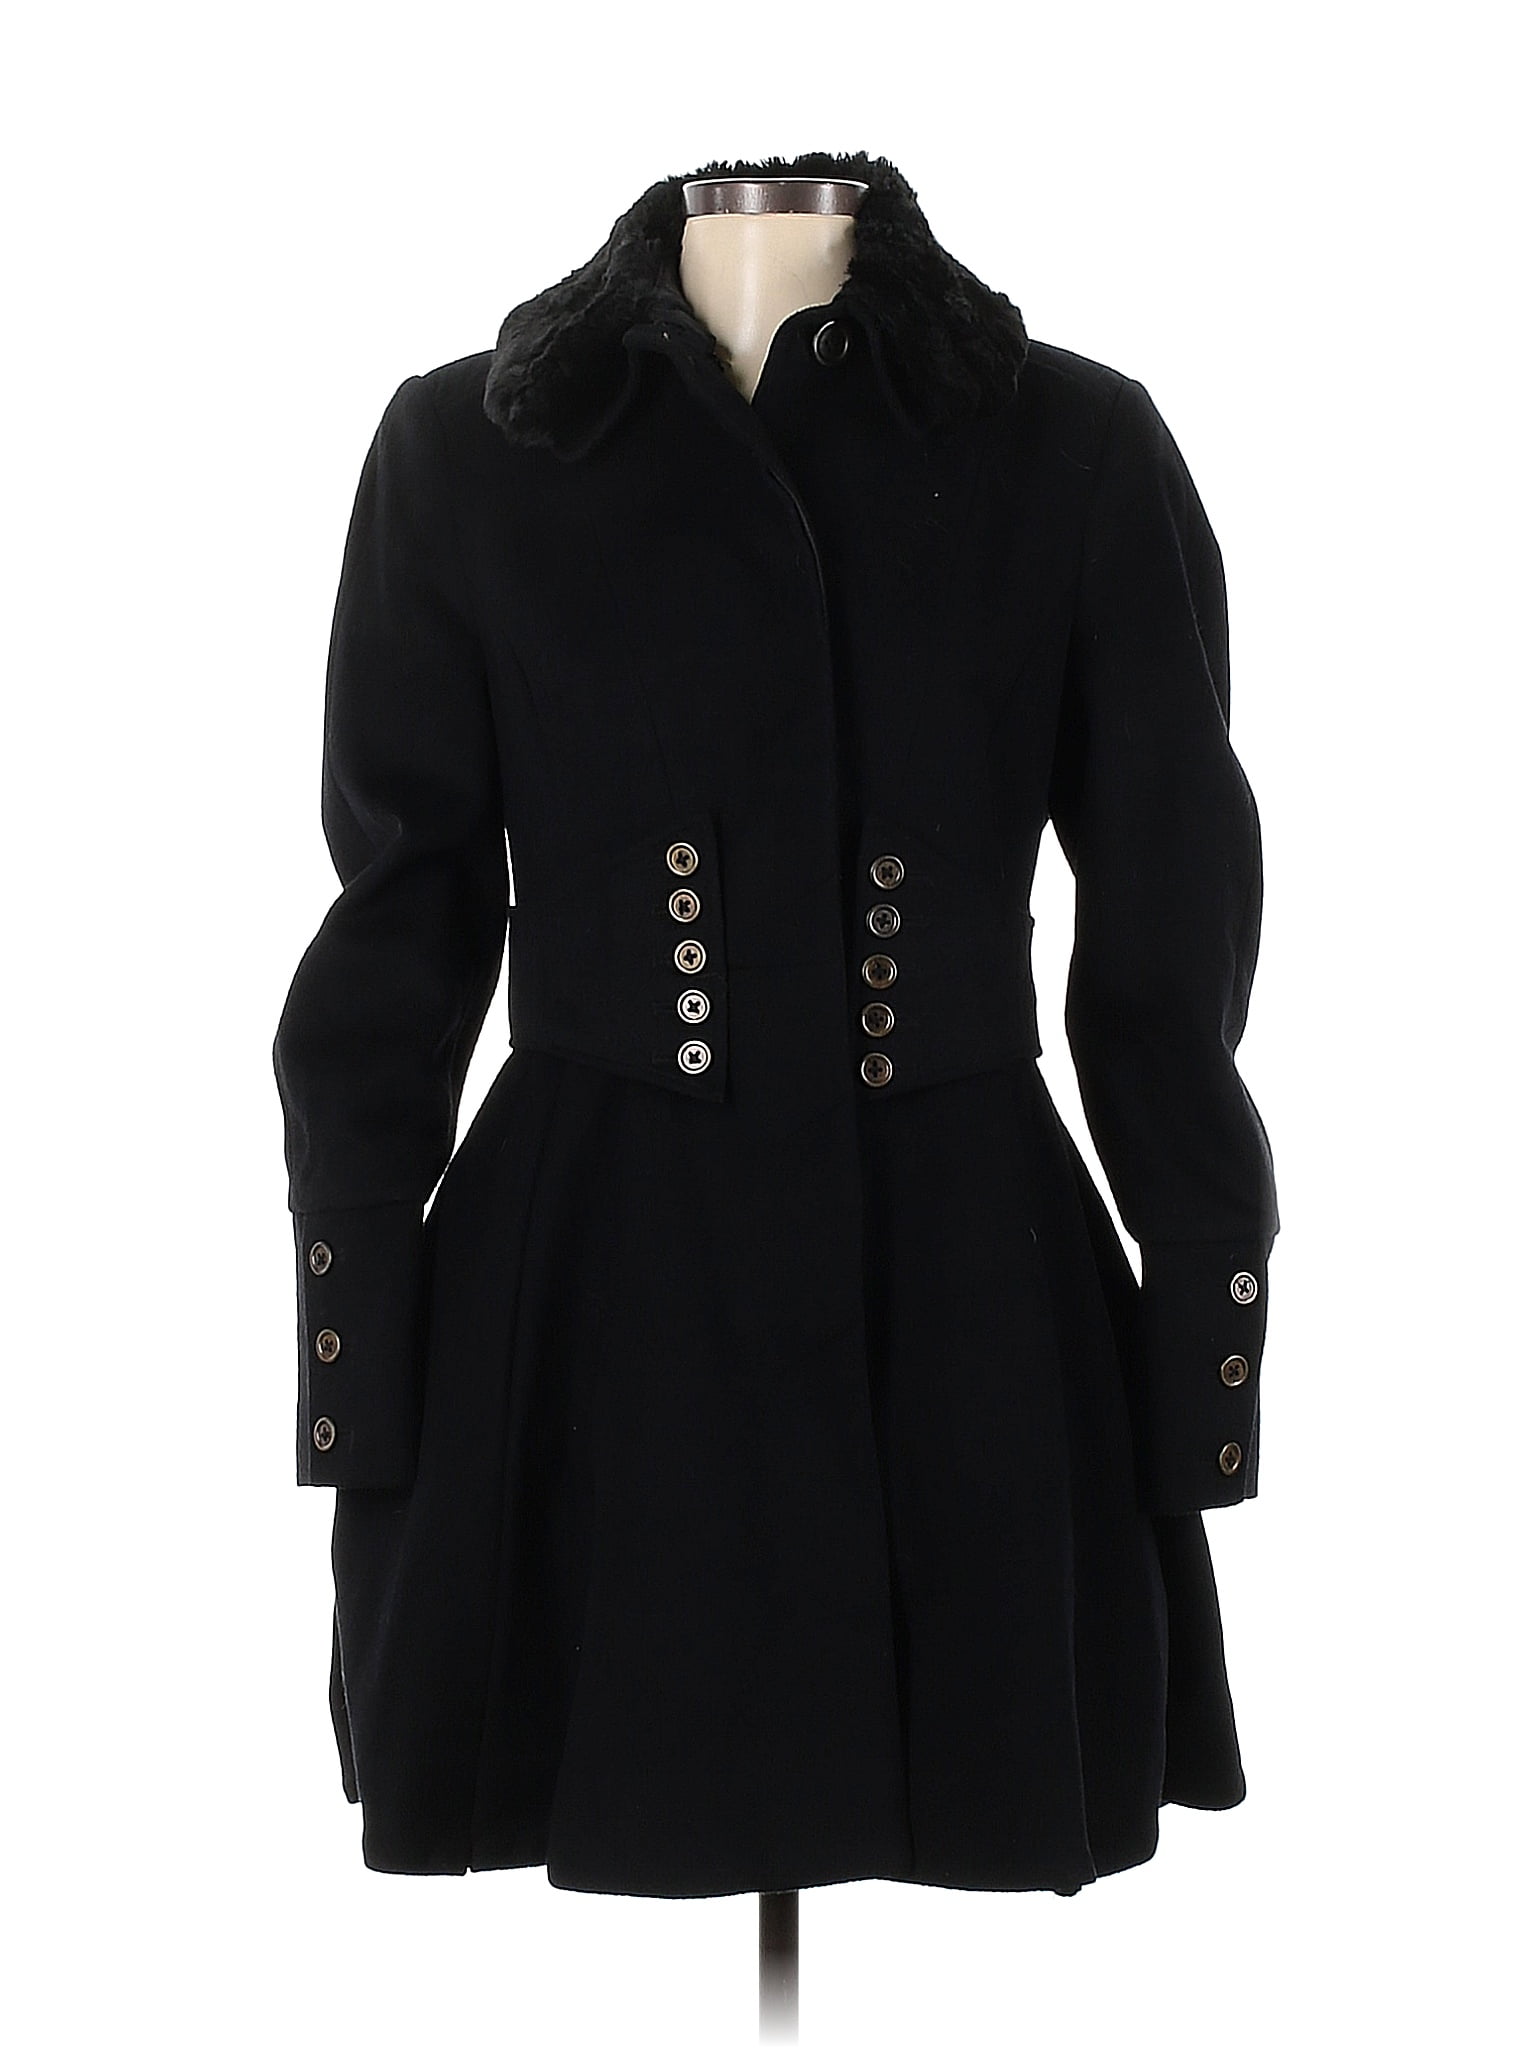 Betsey Johnson Solid Black Coat Size S - 63% off | thredUP